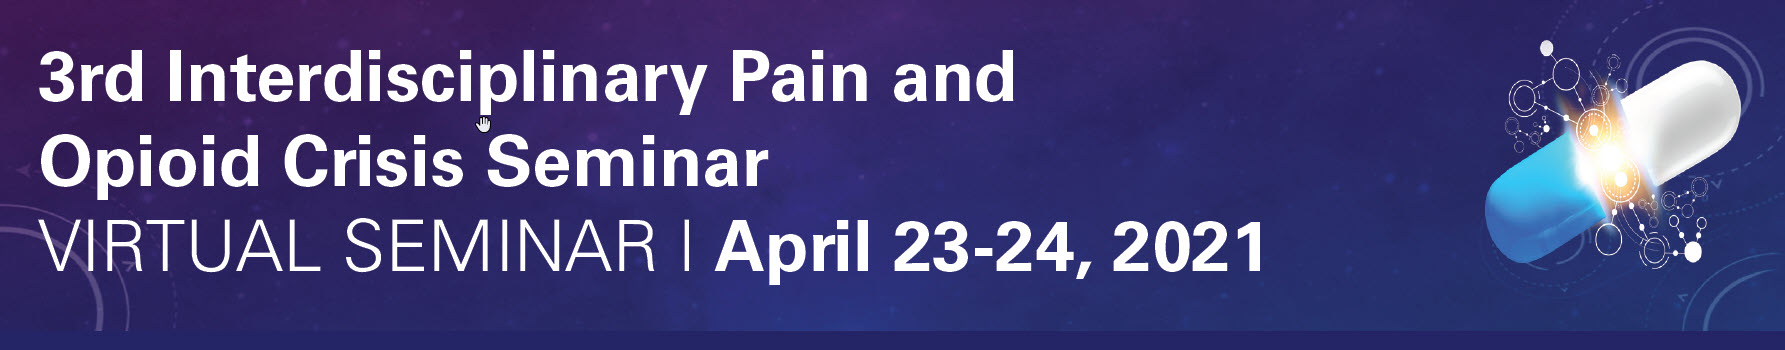 3rd Interdisciplinary Pain and Opioid Crisis Seminar Banner